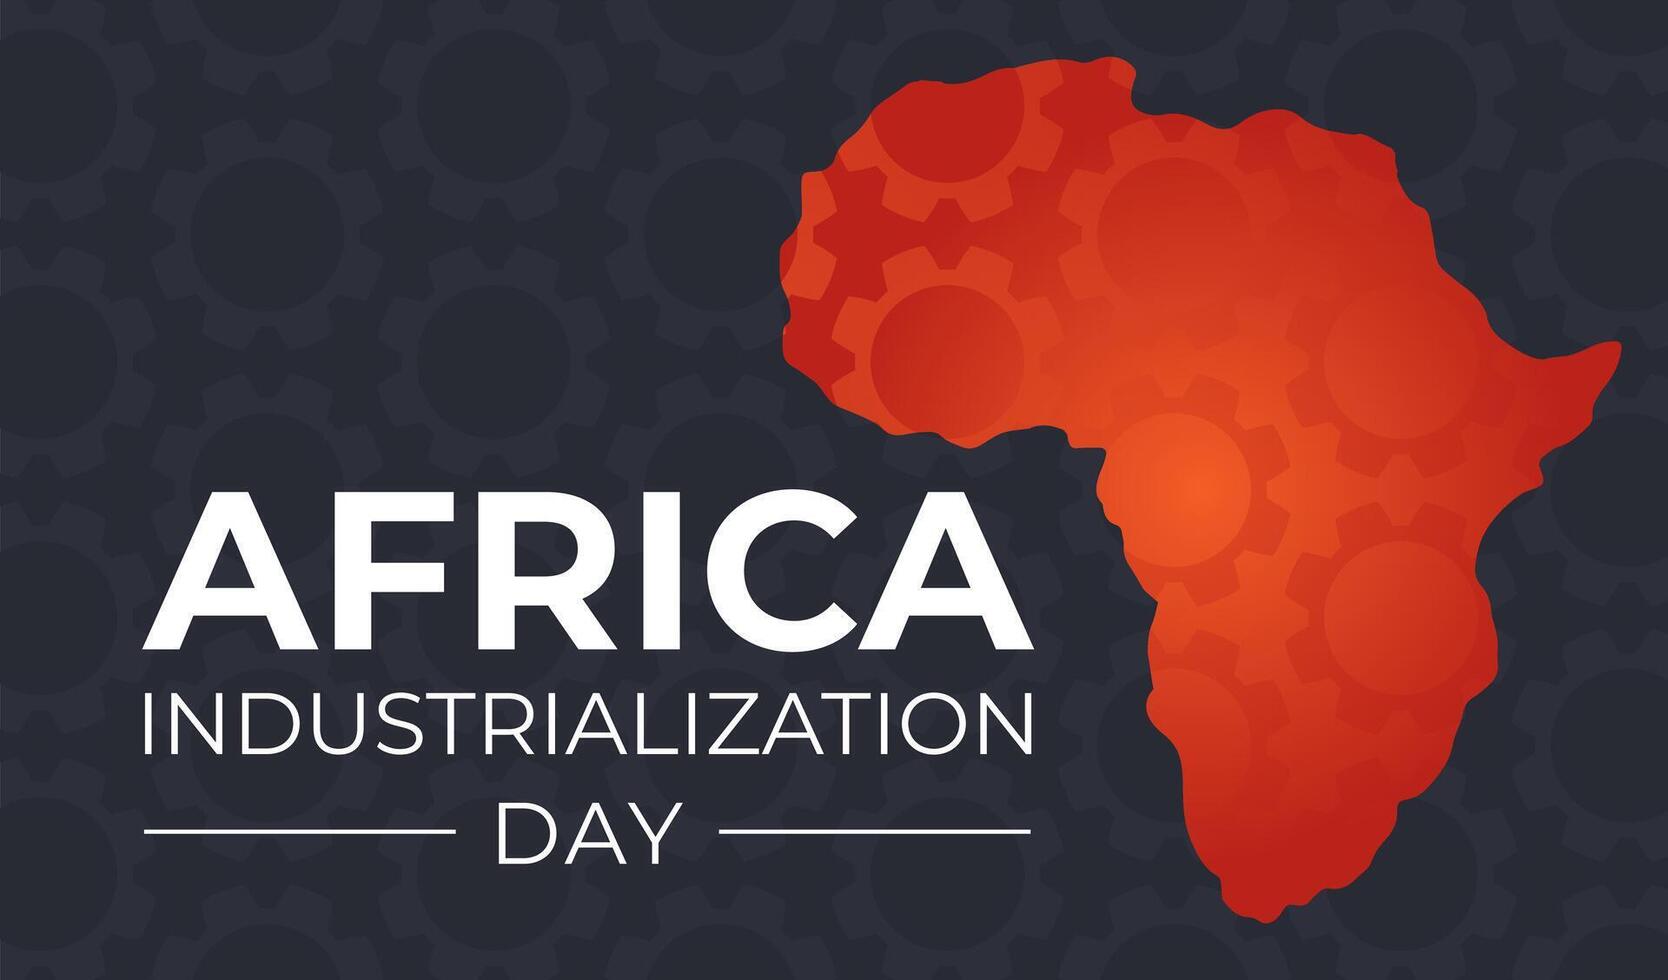 Africa Industrialization Day Background Illustration vector